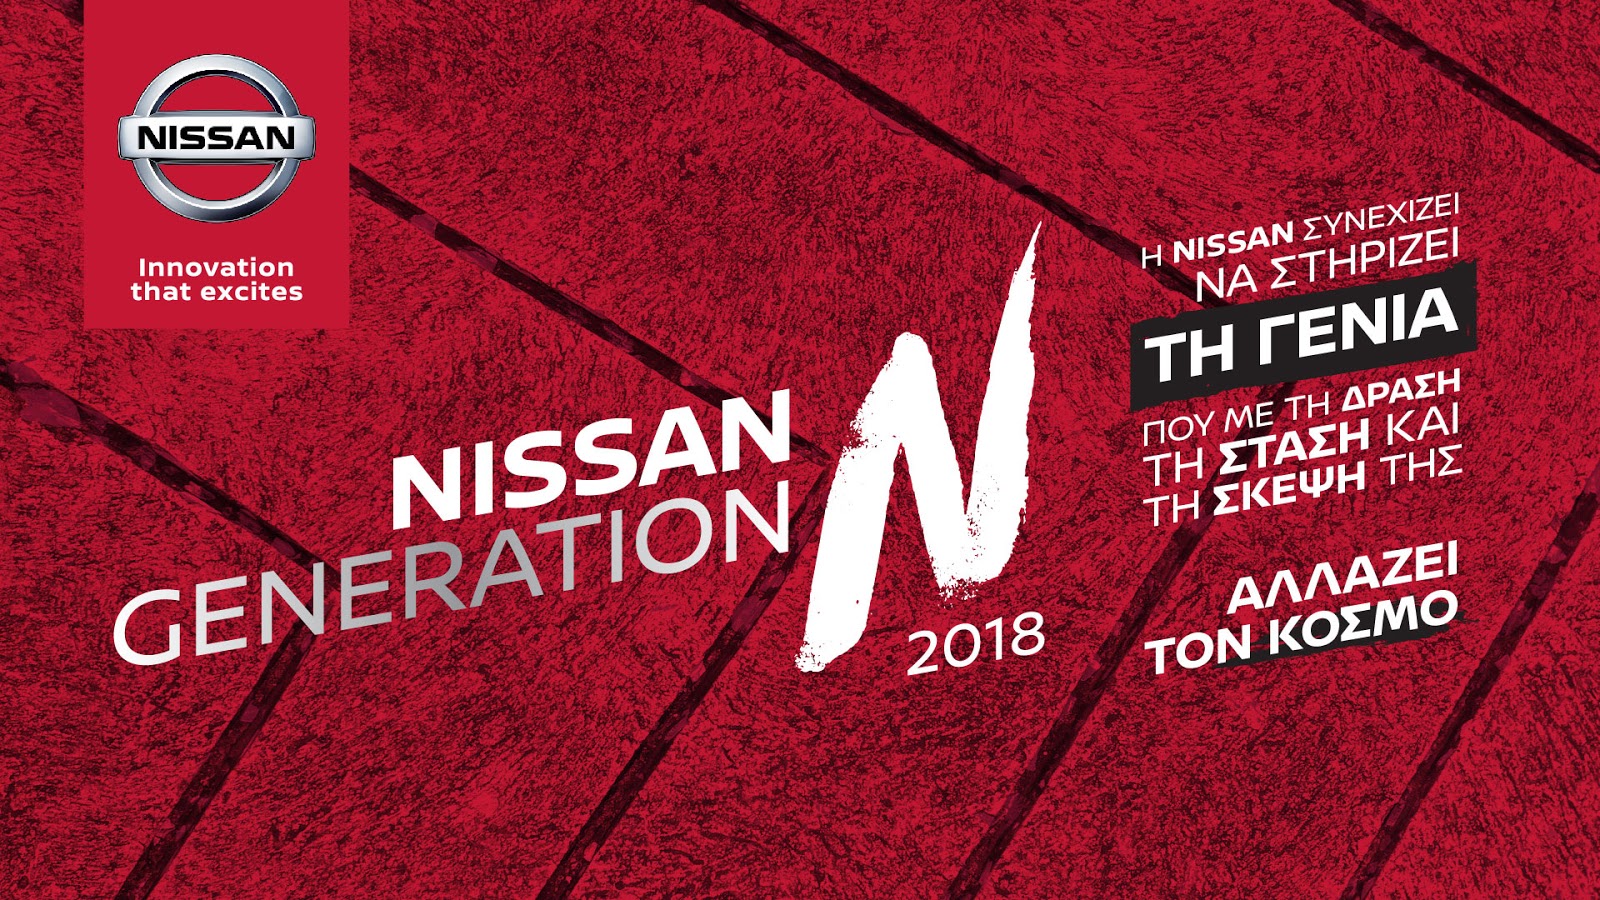 25CE259Dissan2BGeneration tablet H Nissan στηρίζει τη νέα γενιά που καινοτομεί!